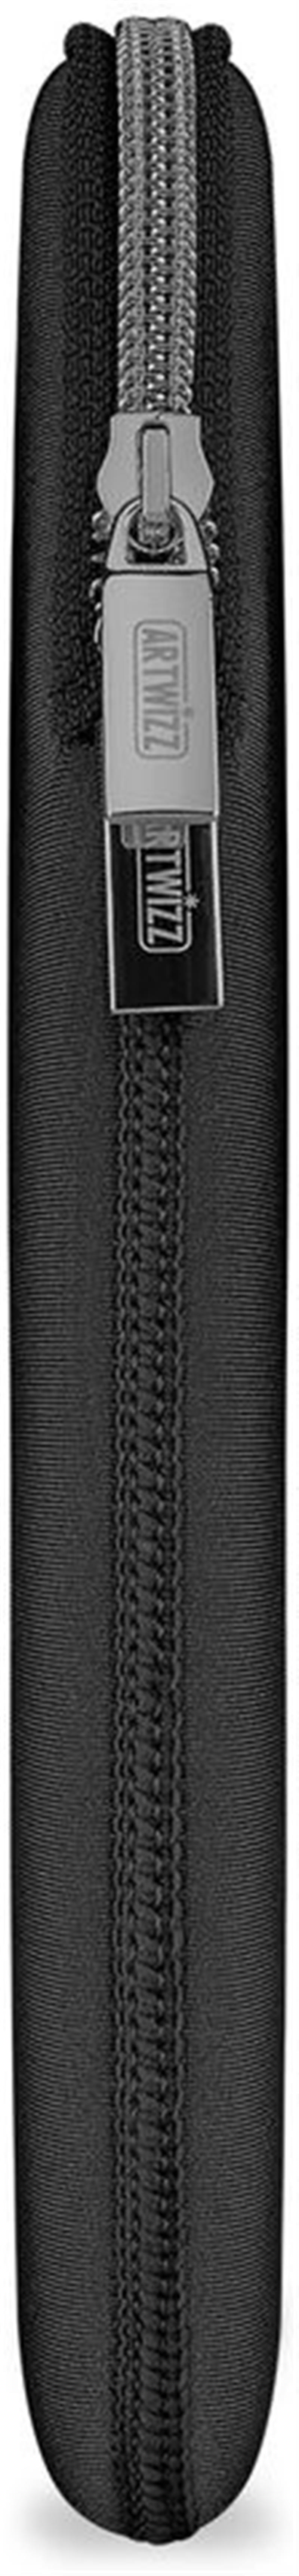 Artwizz Neoprene Sleeve 12-inch Black